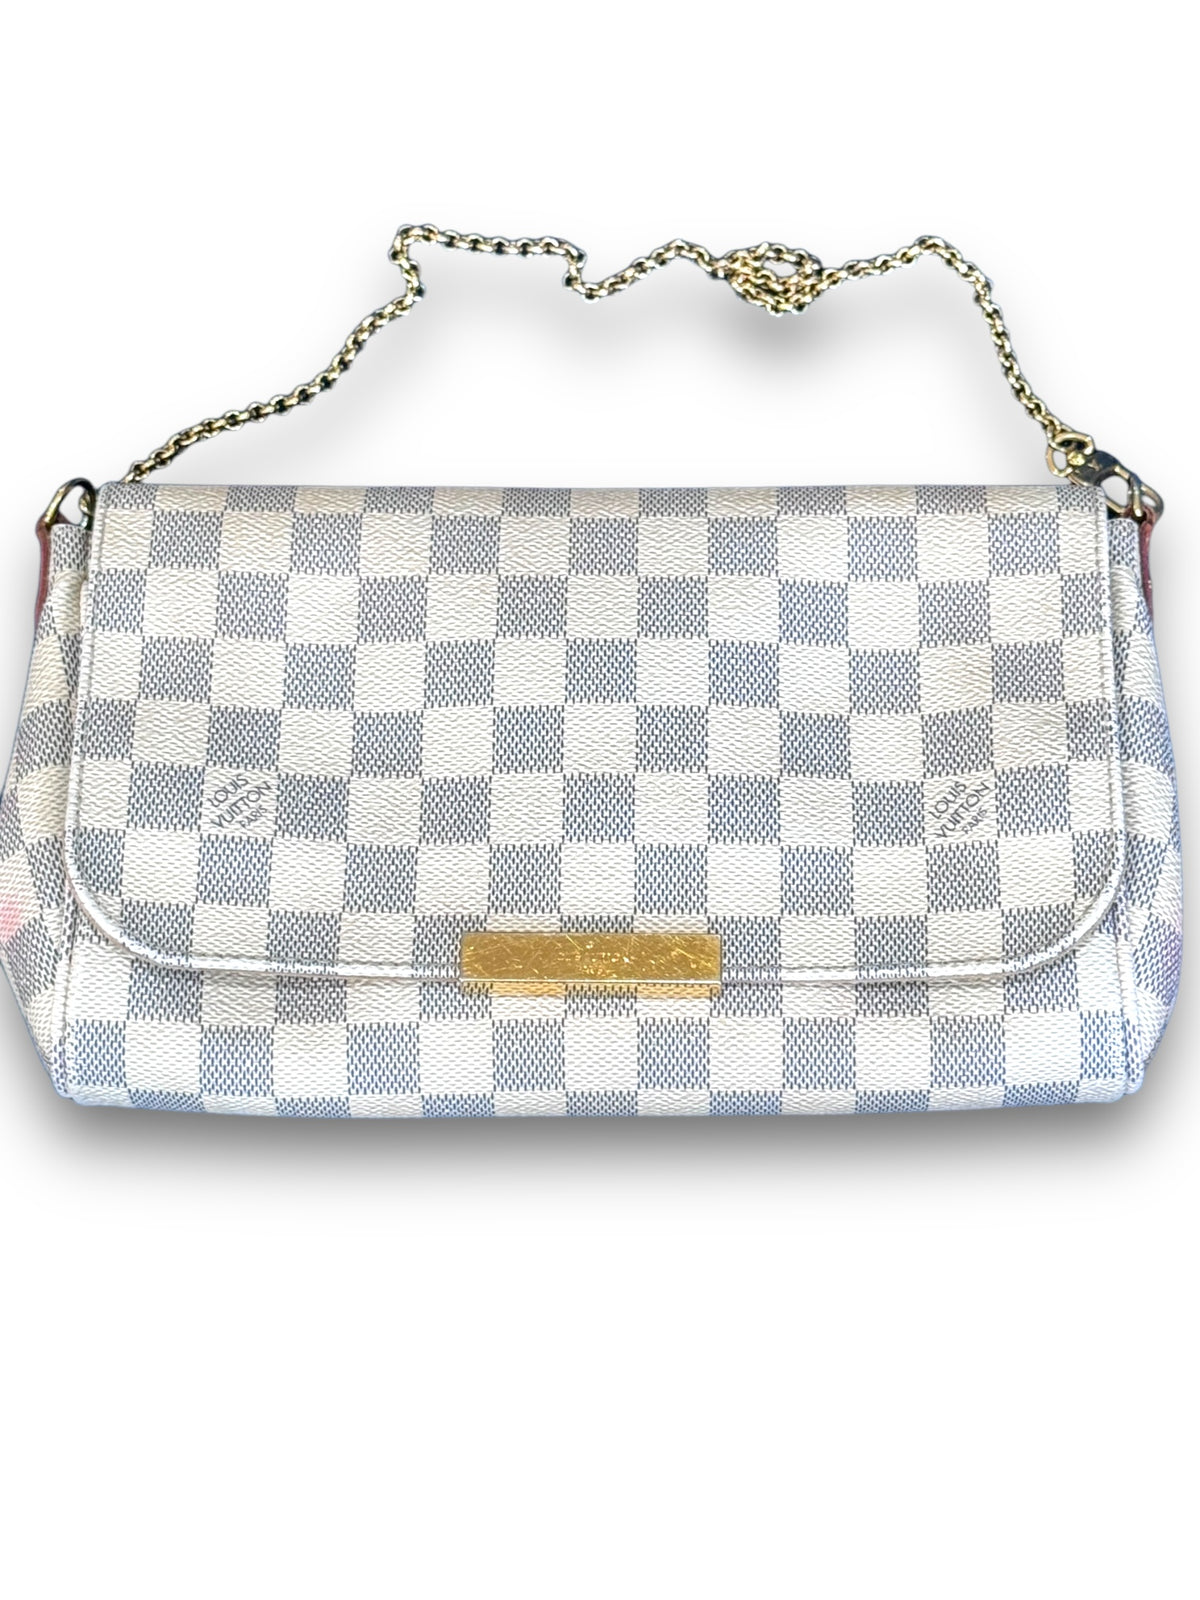 Louis Vuitton Favorite MM bag